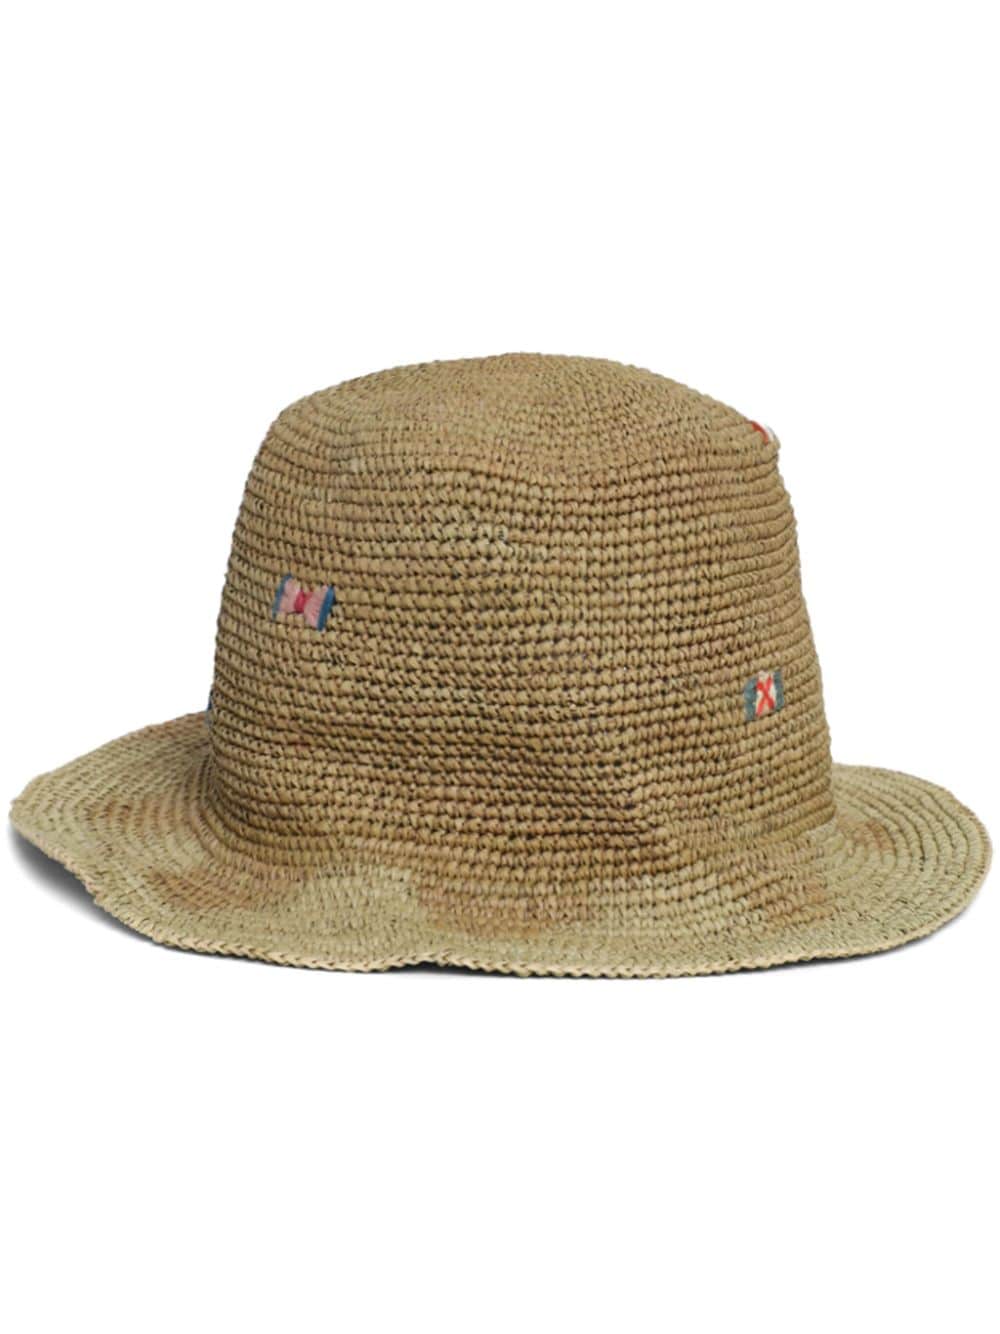 Vegabond straw sun hat